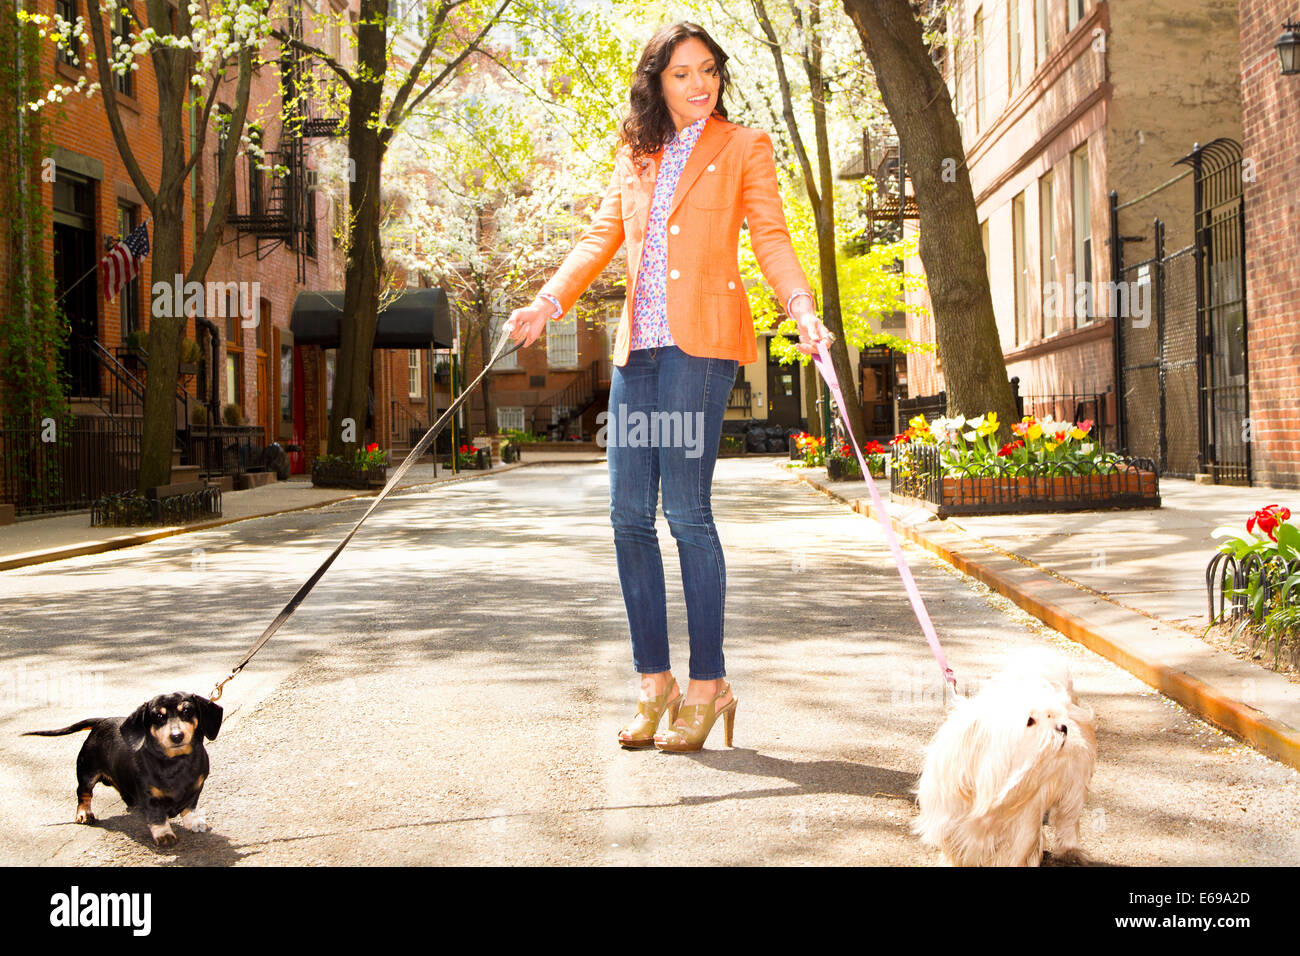 Mixed race woman walking dogs on city street Stock Photo